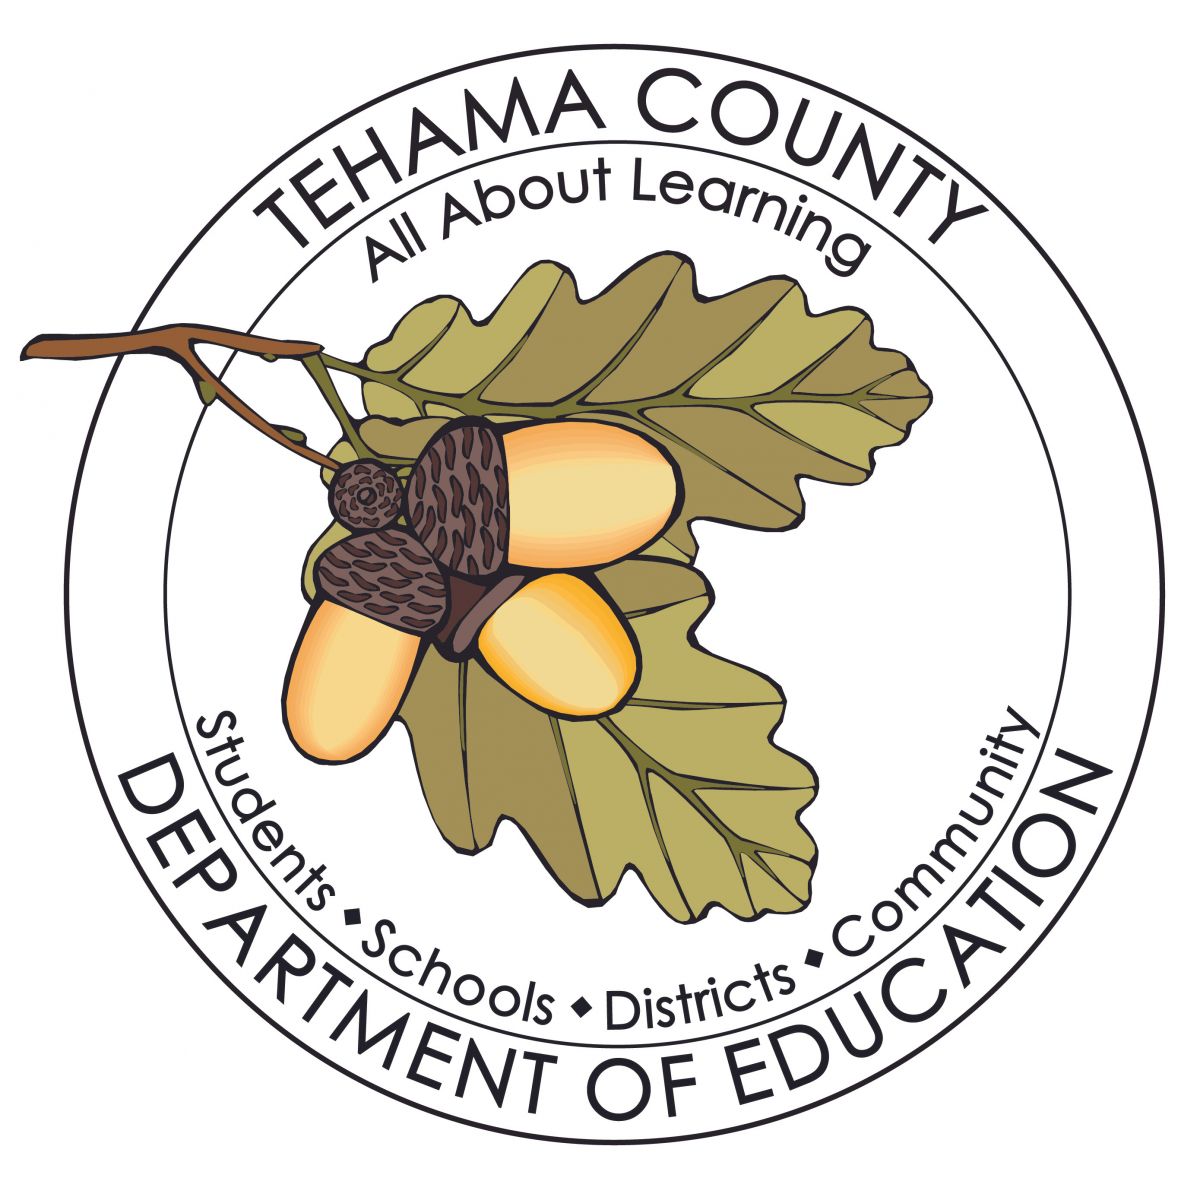 Tehama County Department of Education logo